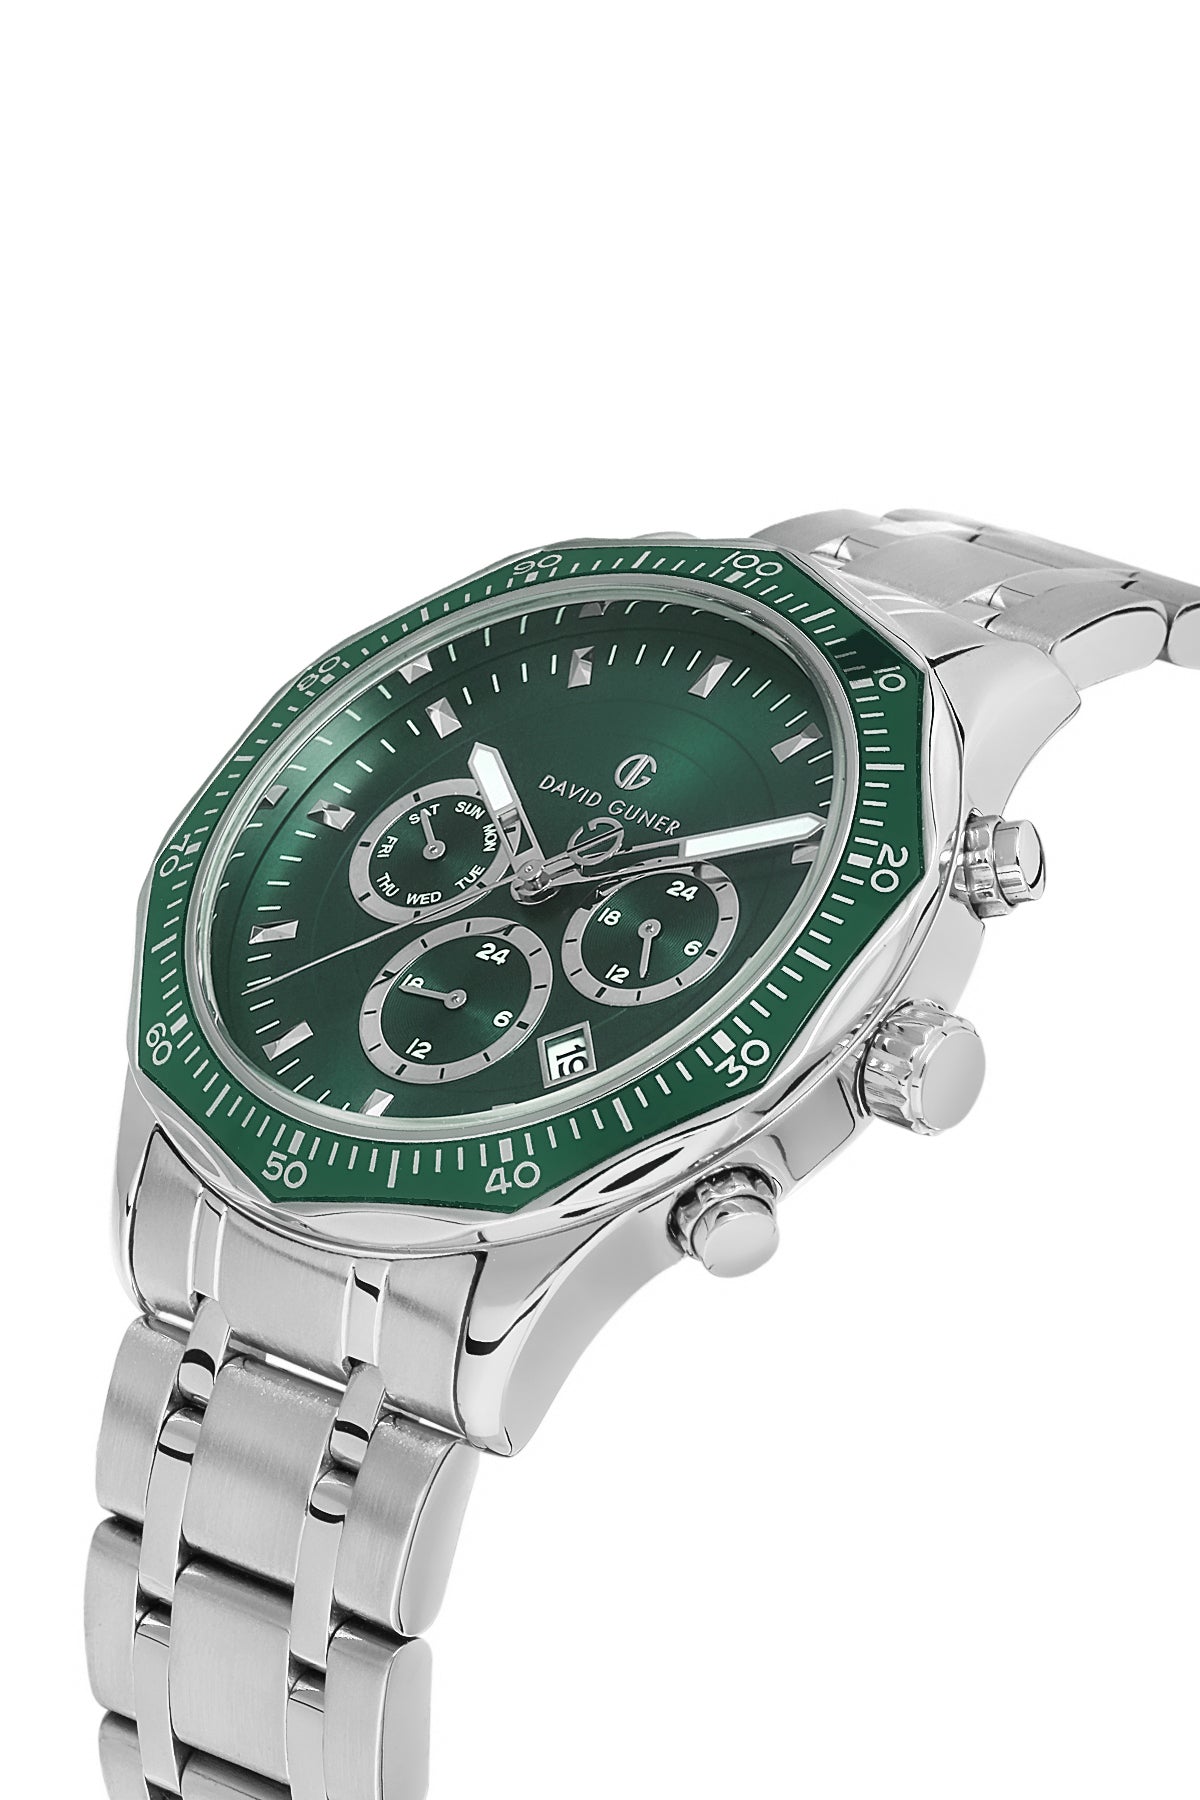 DAVID GUNER Green Dial Silver Plated Men's Wristwatch